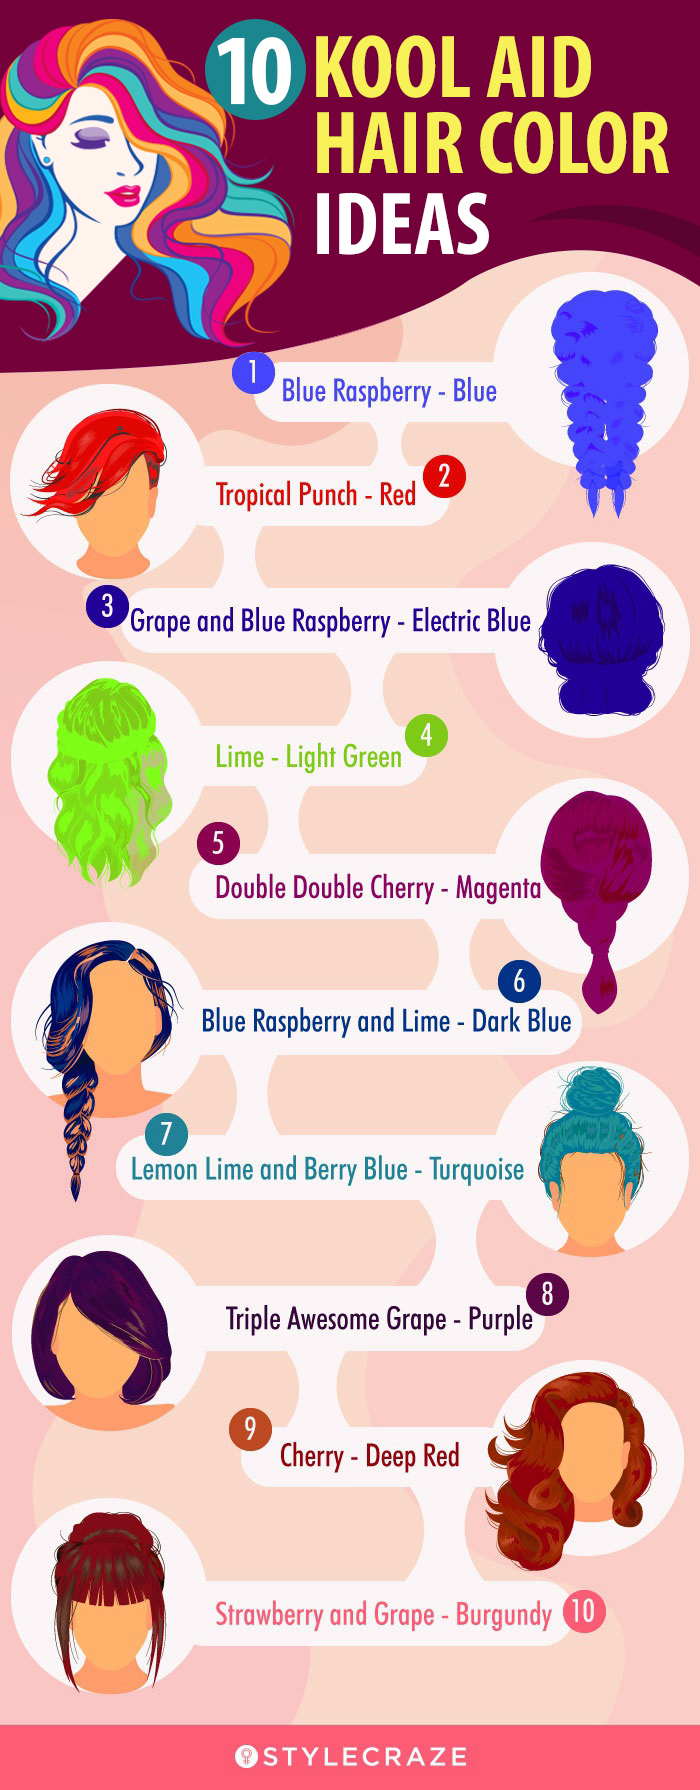 10 kool aid hair color ideas [infographic]